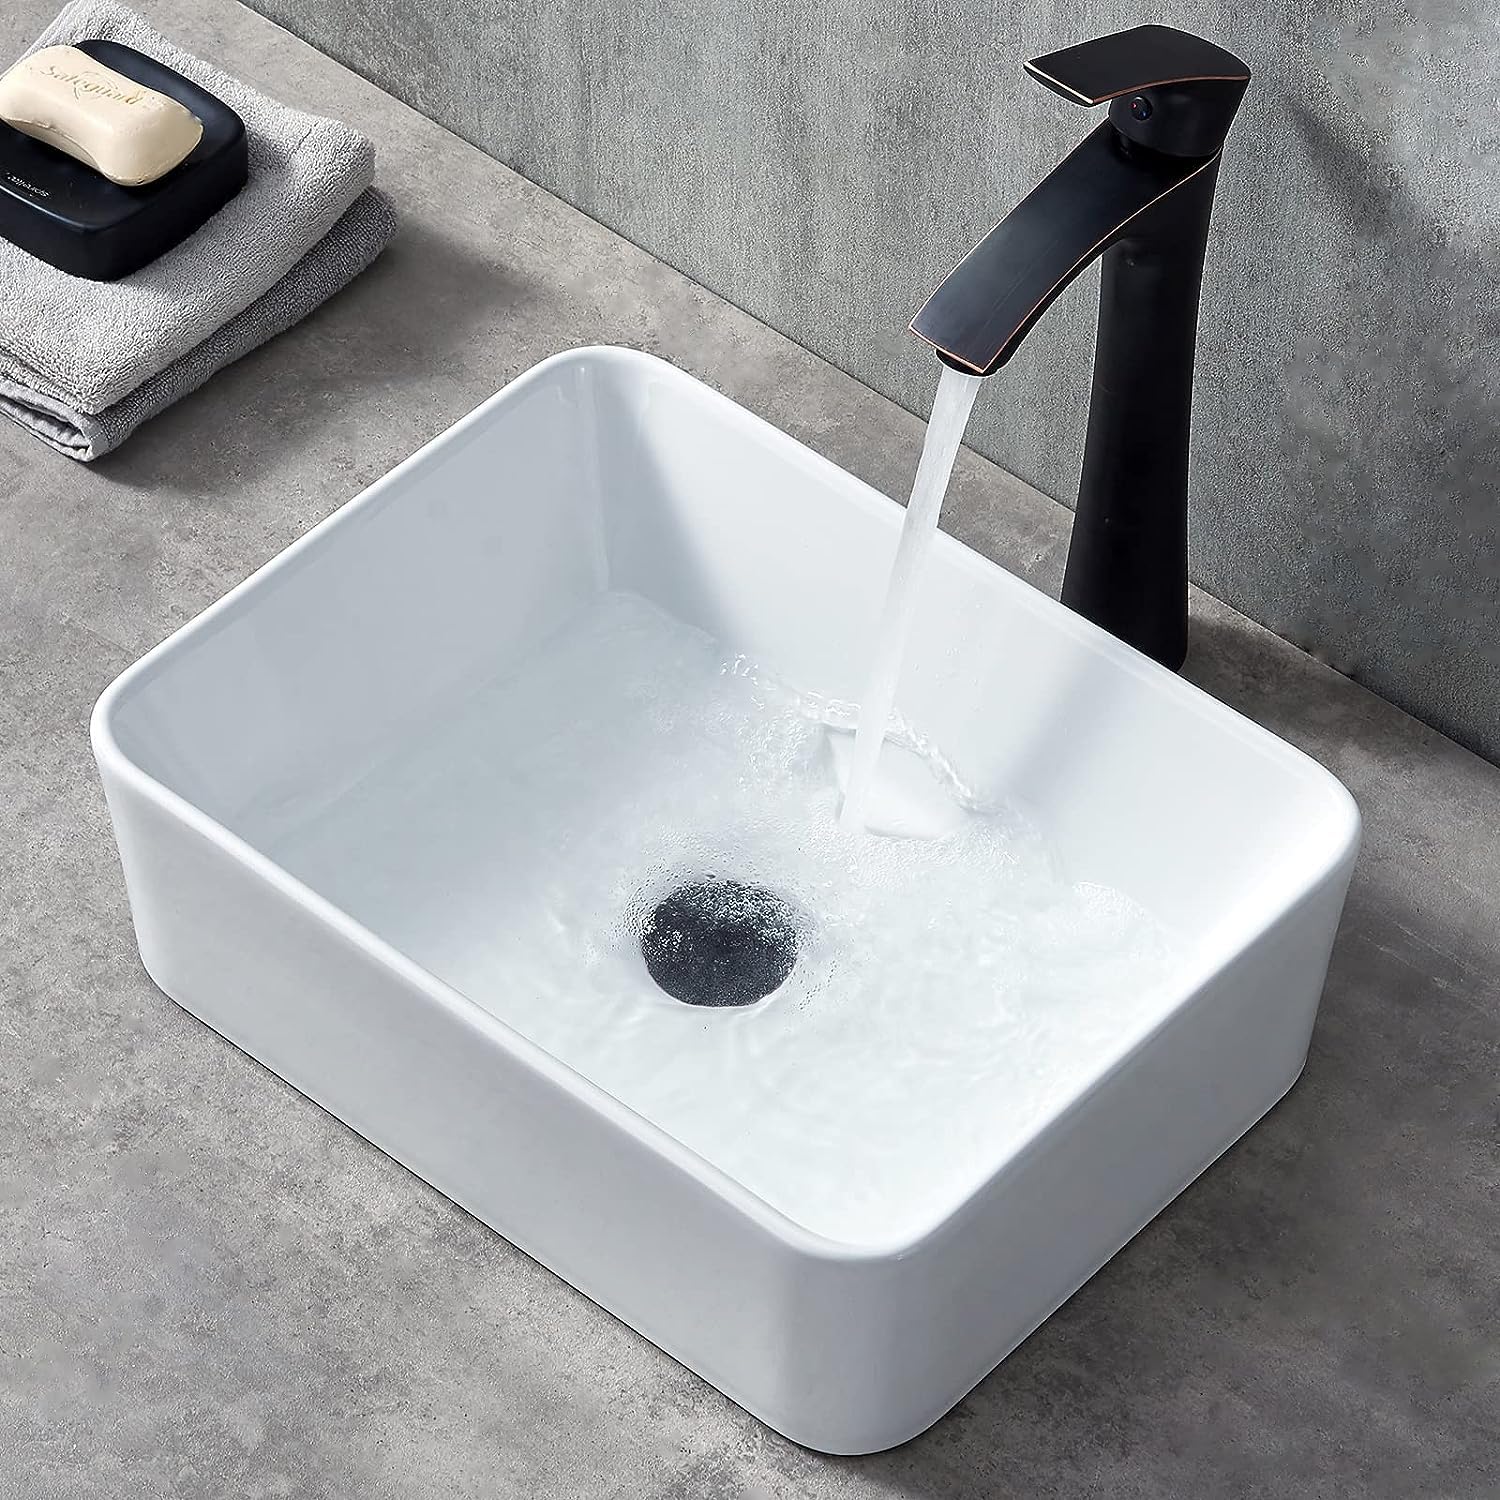 Ufaucet 16x12 Ceramic Vessel Sink